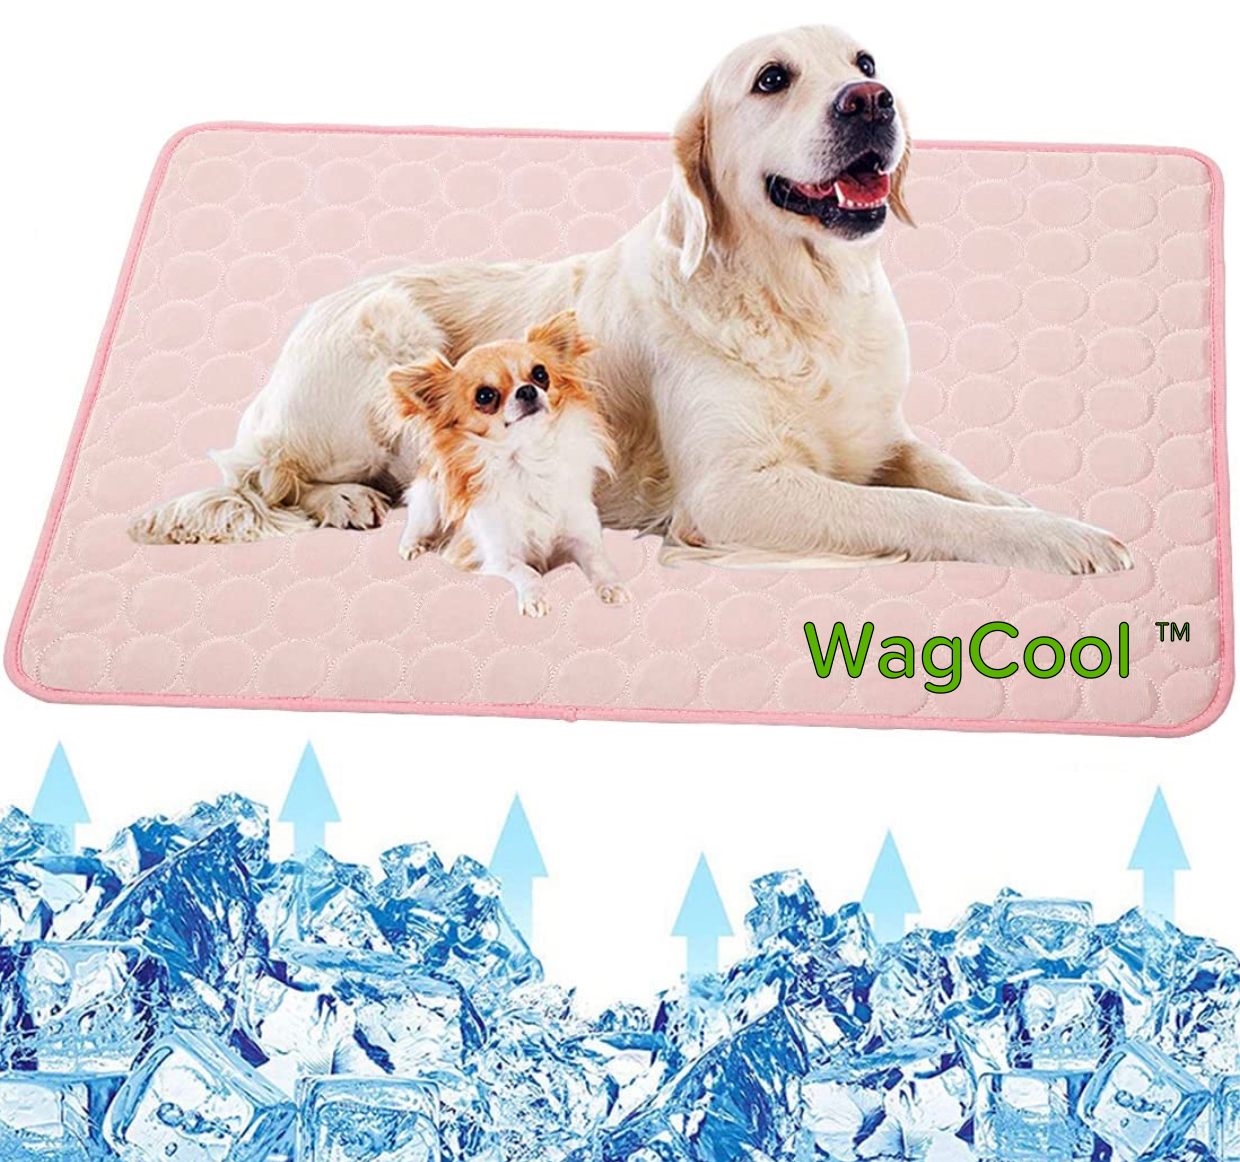 WagCool™ - Dog Cooling Mat (Original)